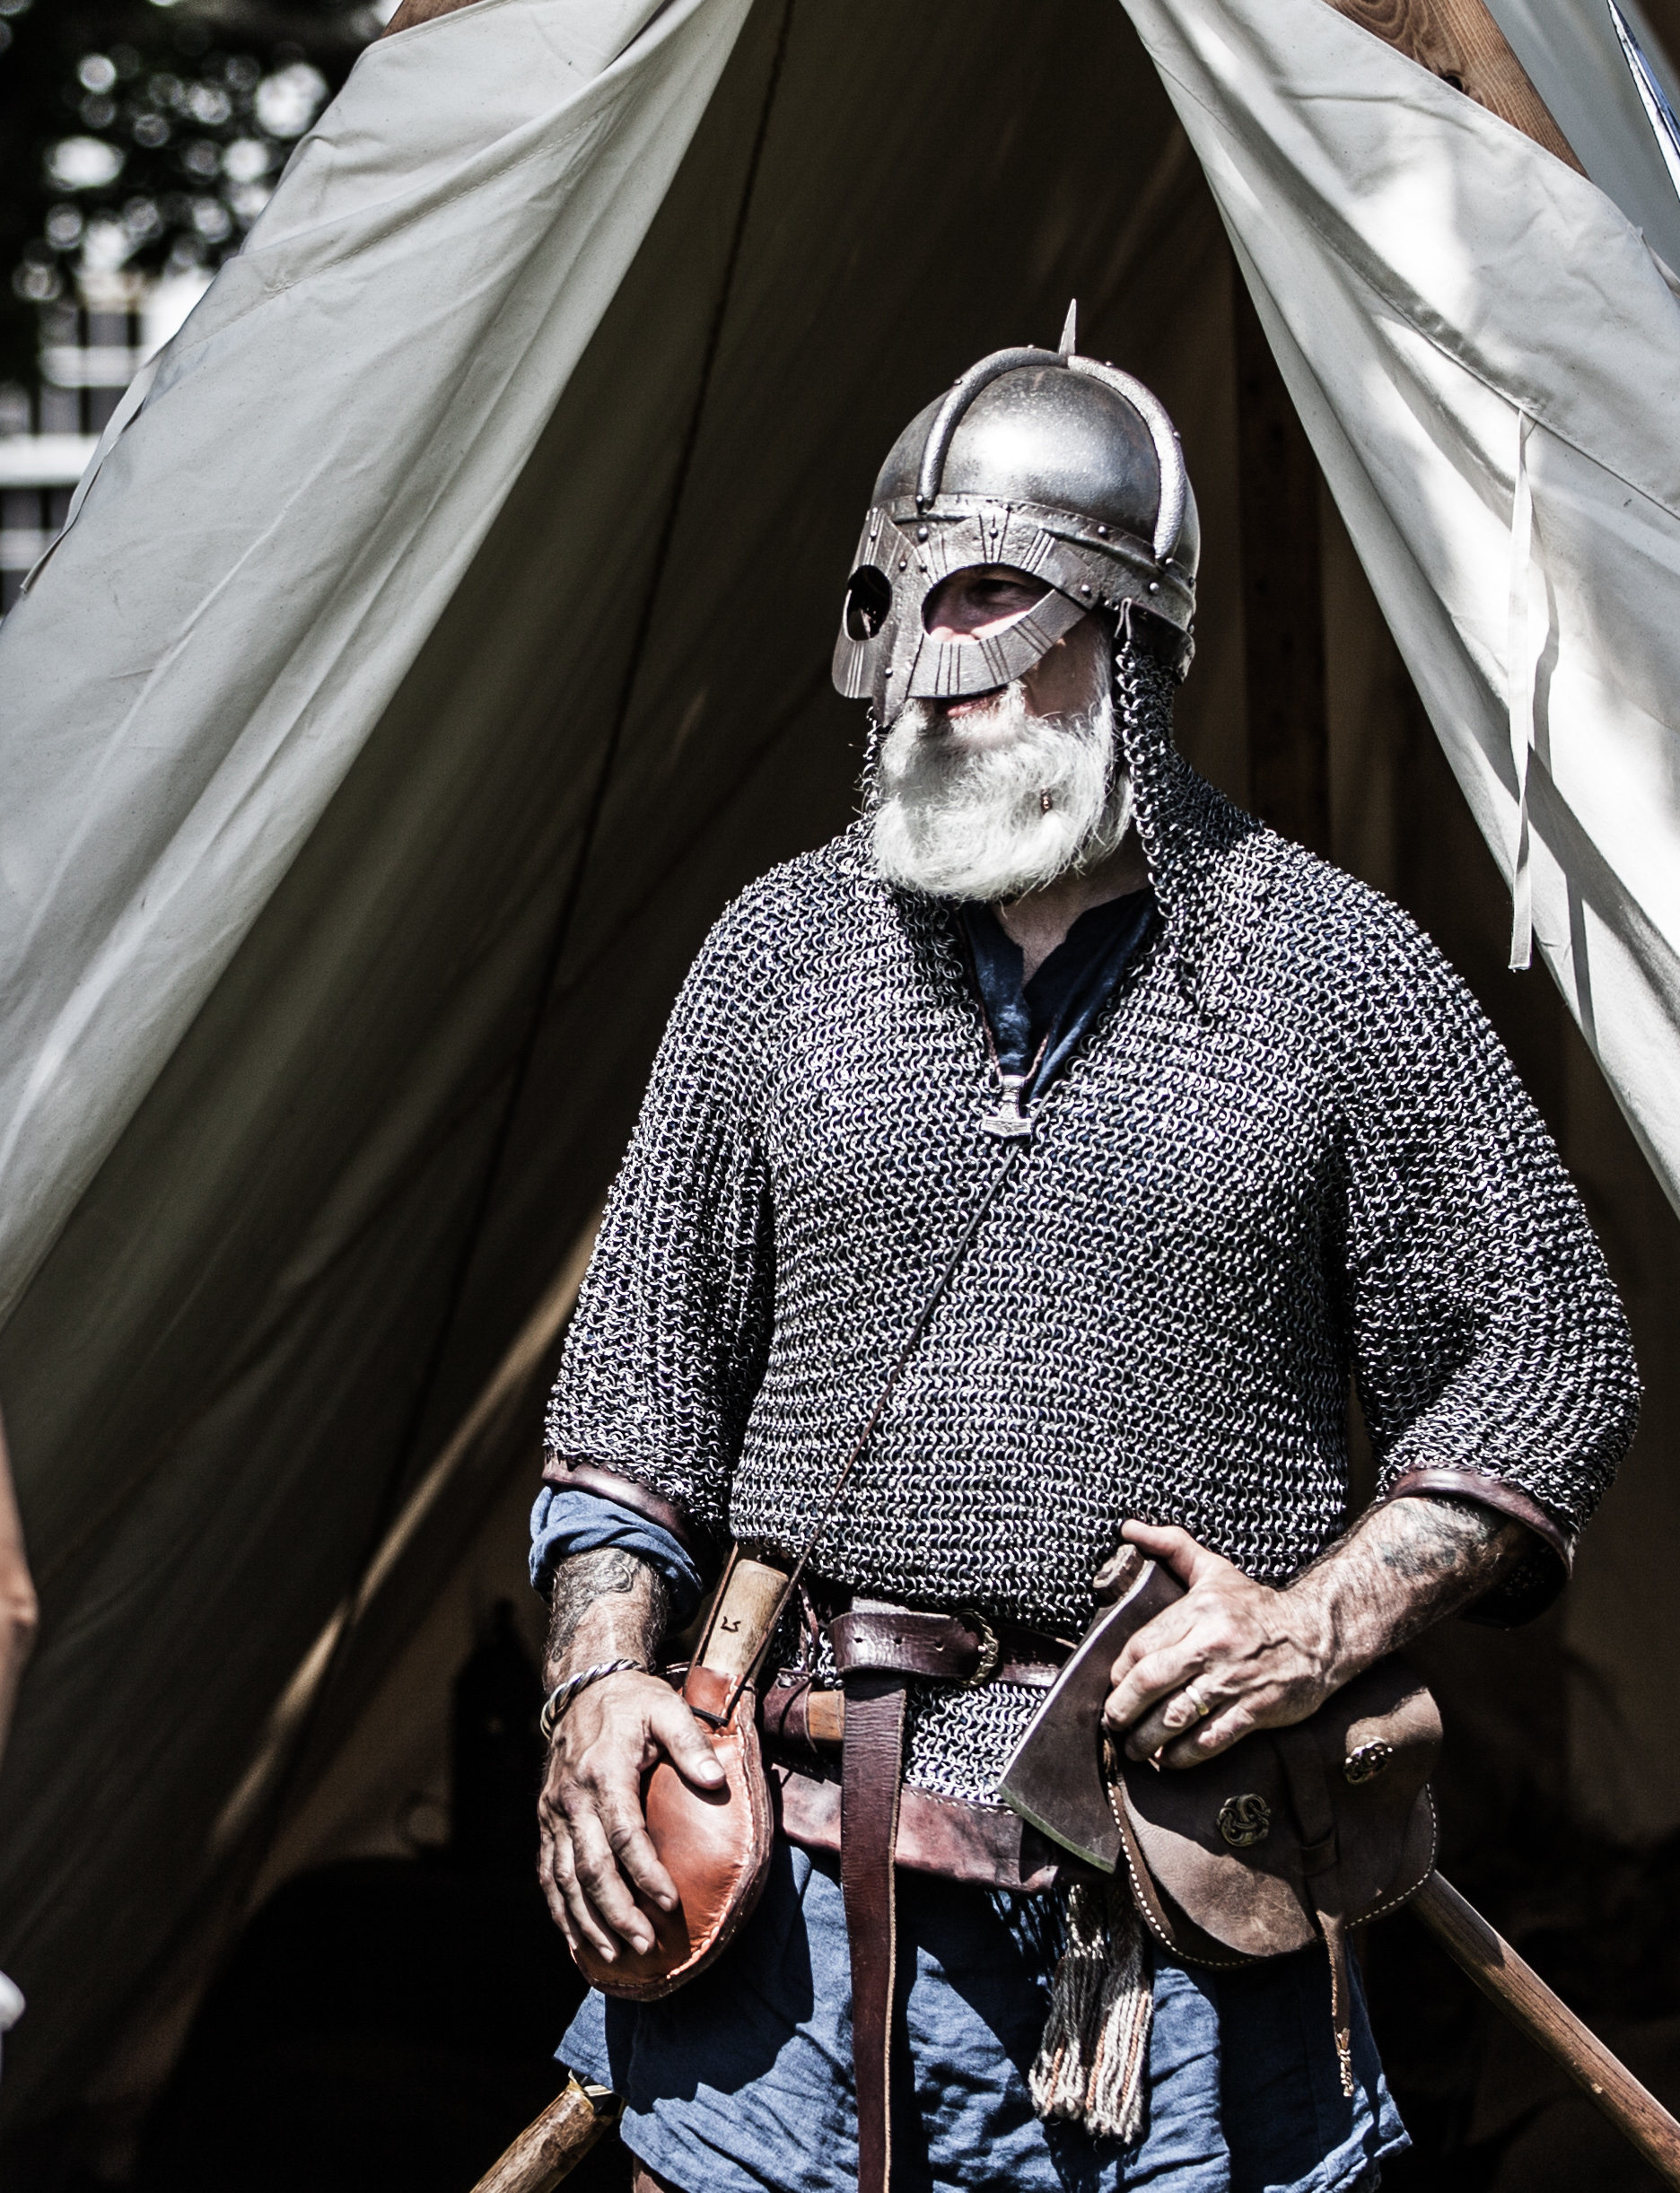 Vikings Days will feature a Viking village encampment by living historians Draugar Vinlands. Photo credit: Mystic Seaport Museum